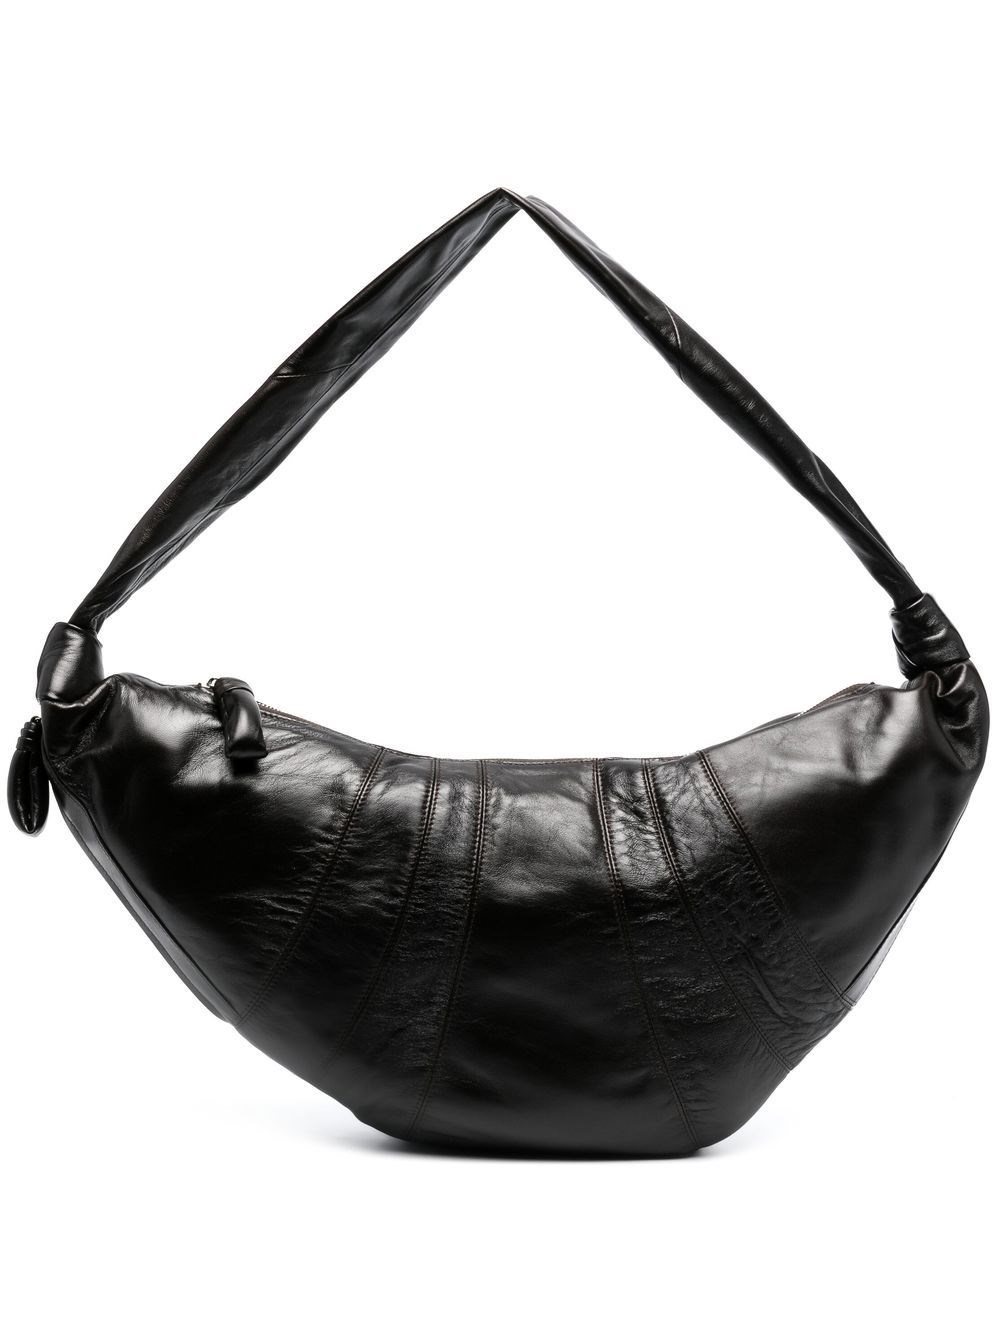 Lemaire Croissant Leather Shoulder Bag In Brown